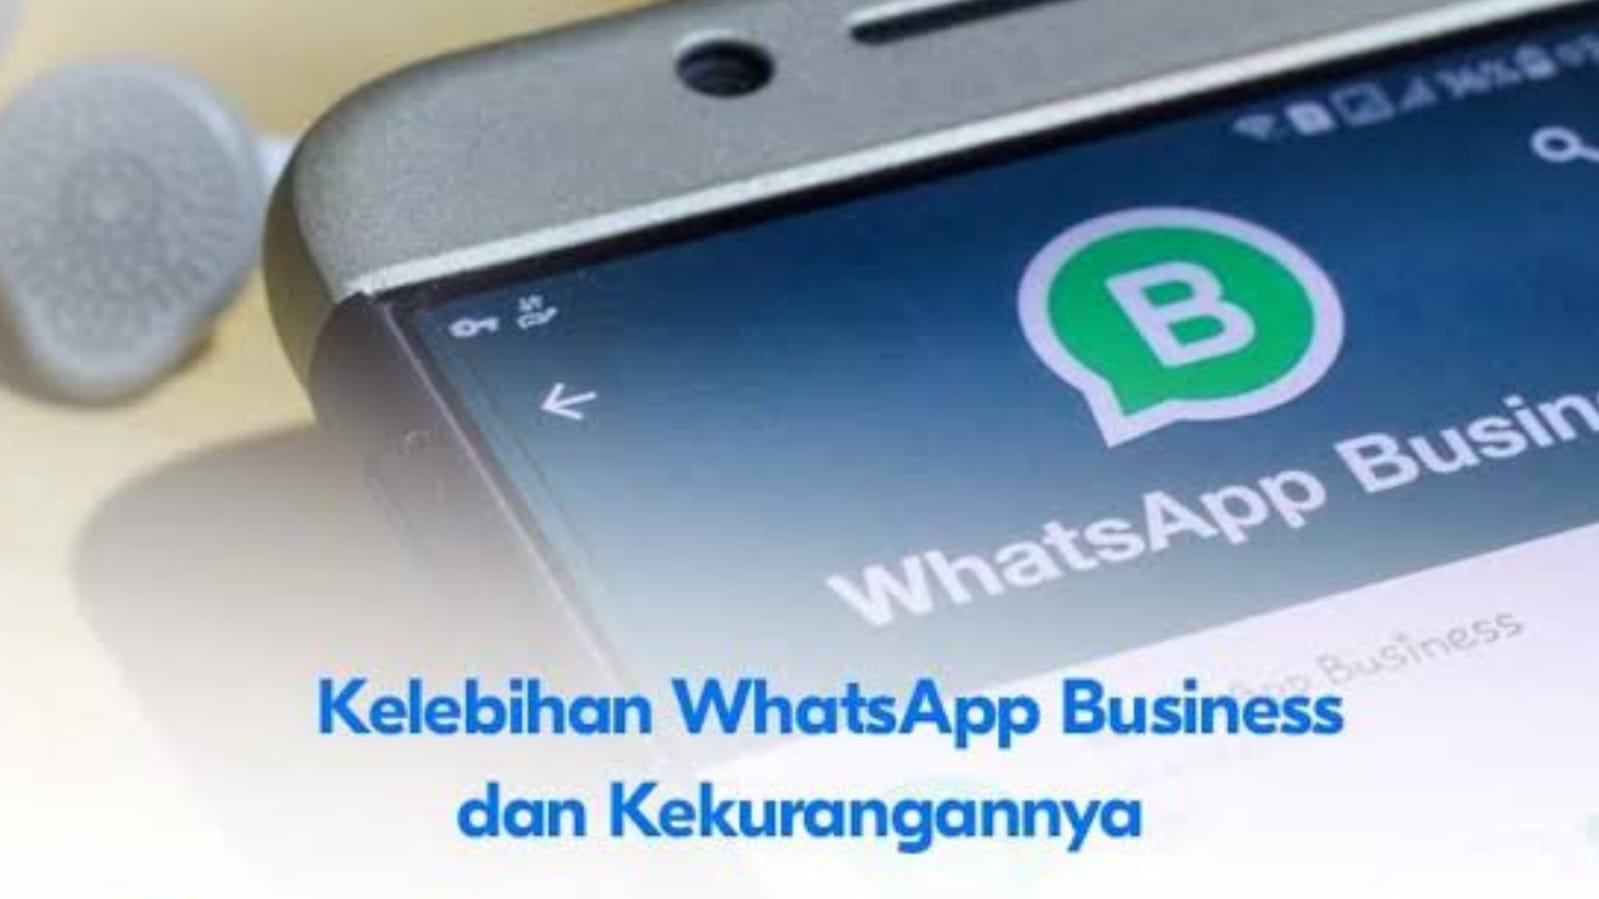 Kelebihan Whatsapp Business